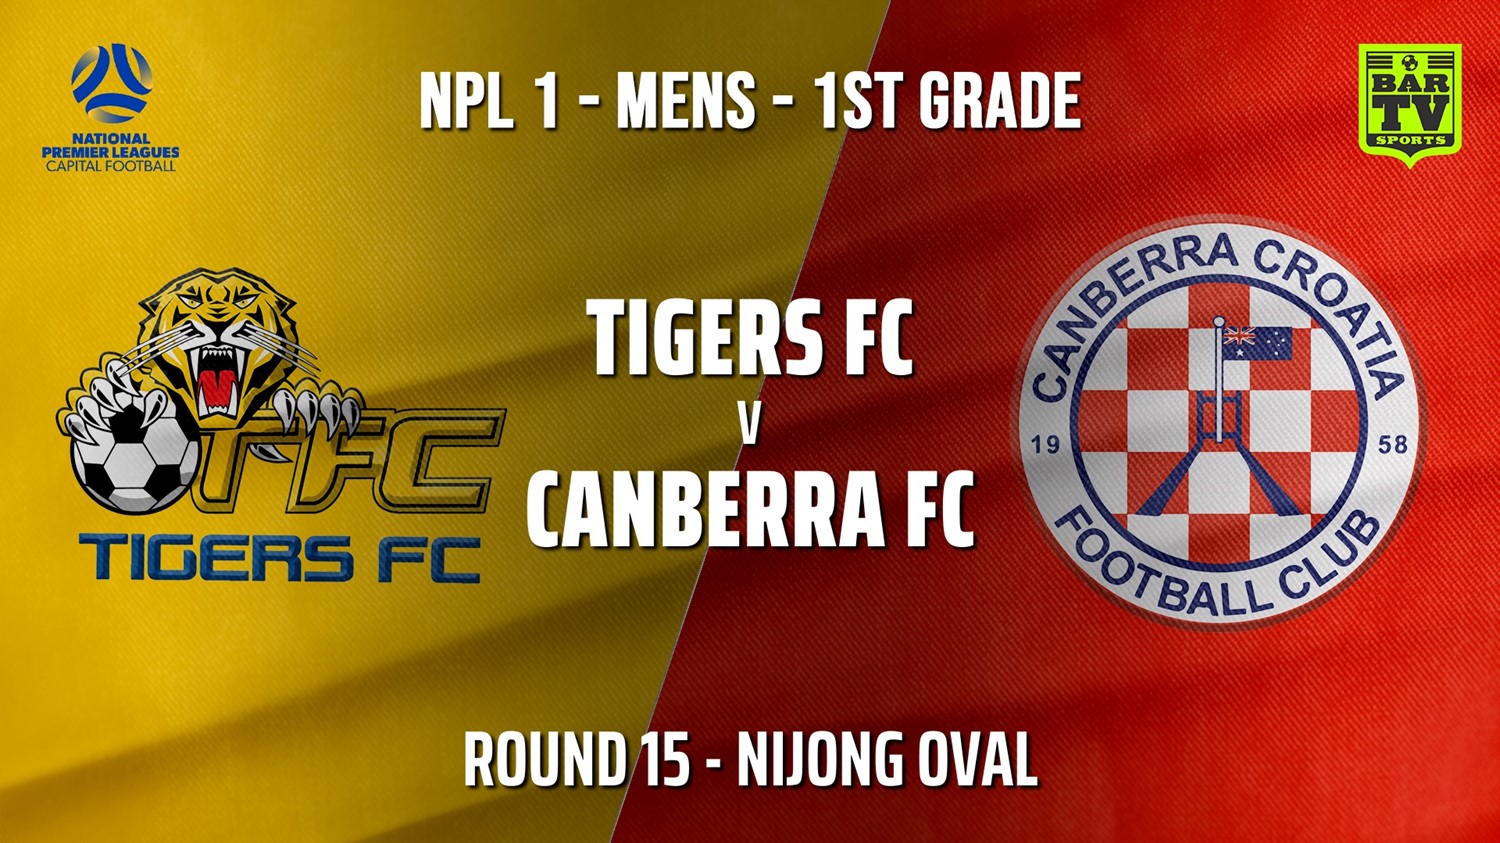 210725-Capital NPL Round 15 - Tigers FC v Canberra FC Slate Image